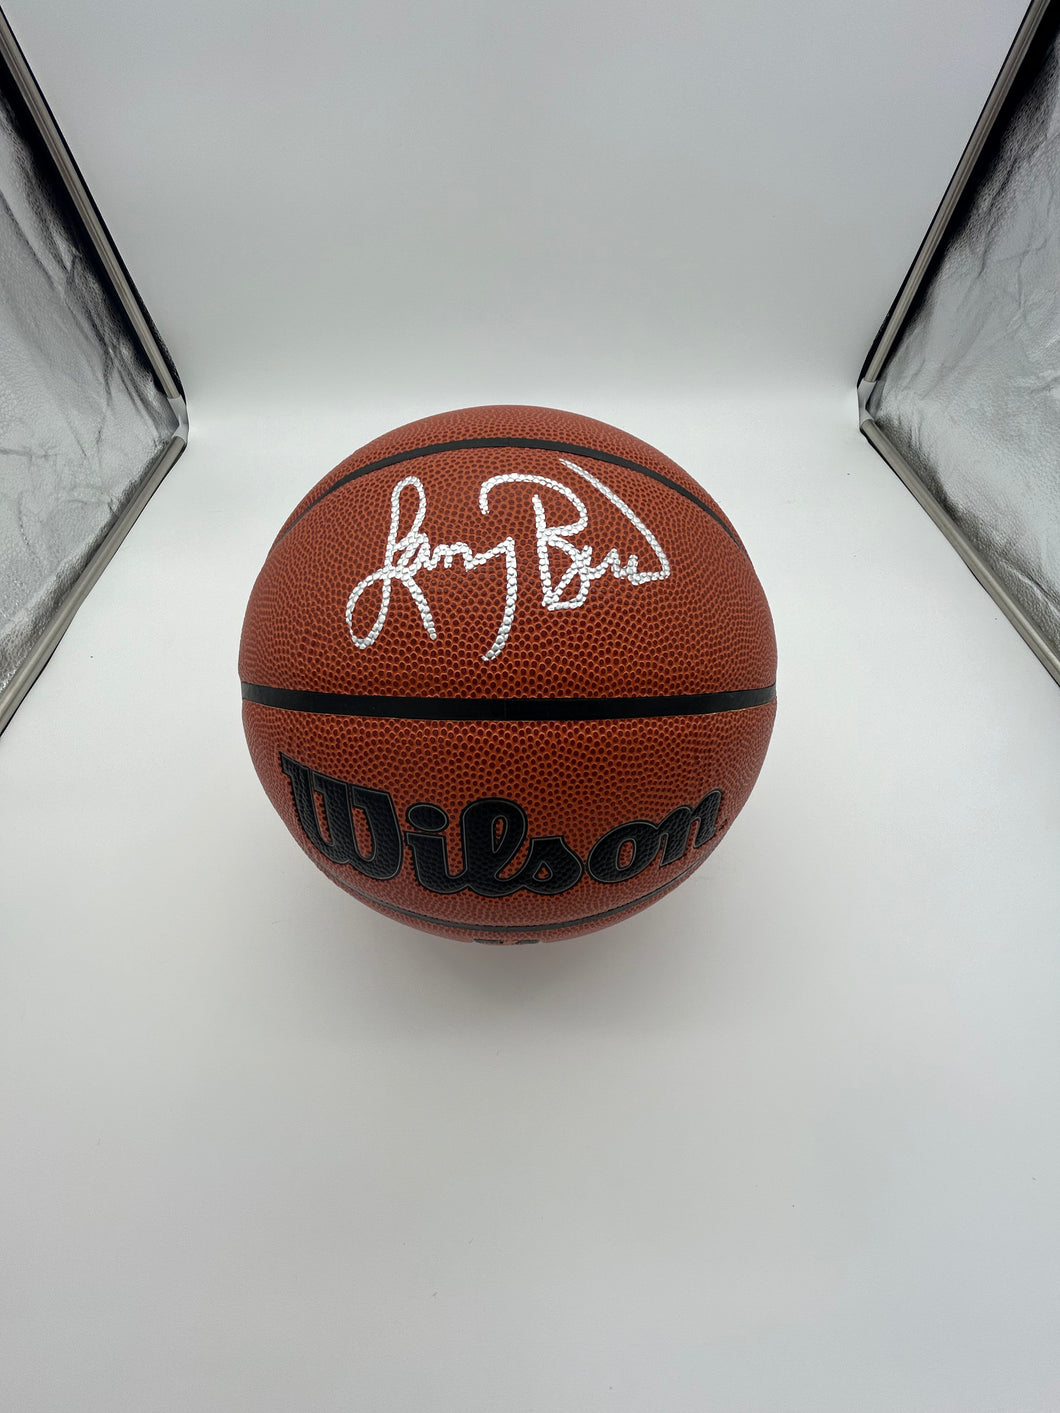 Larry Bird signed basketball